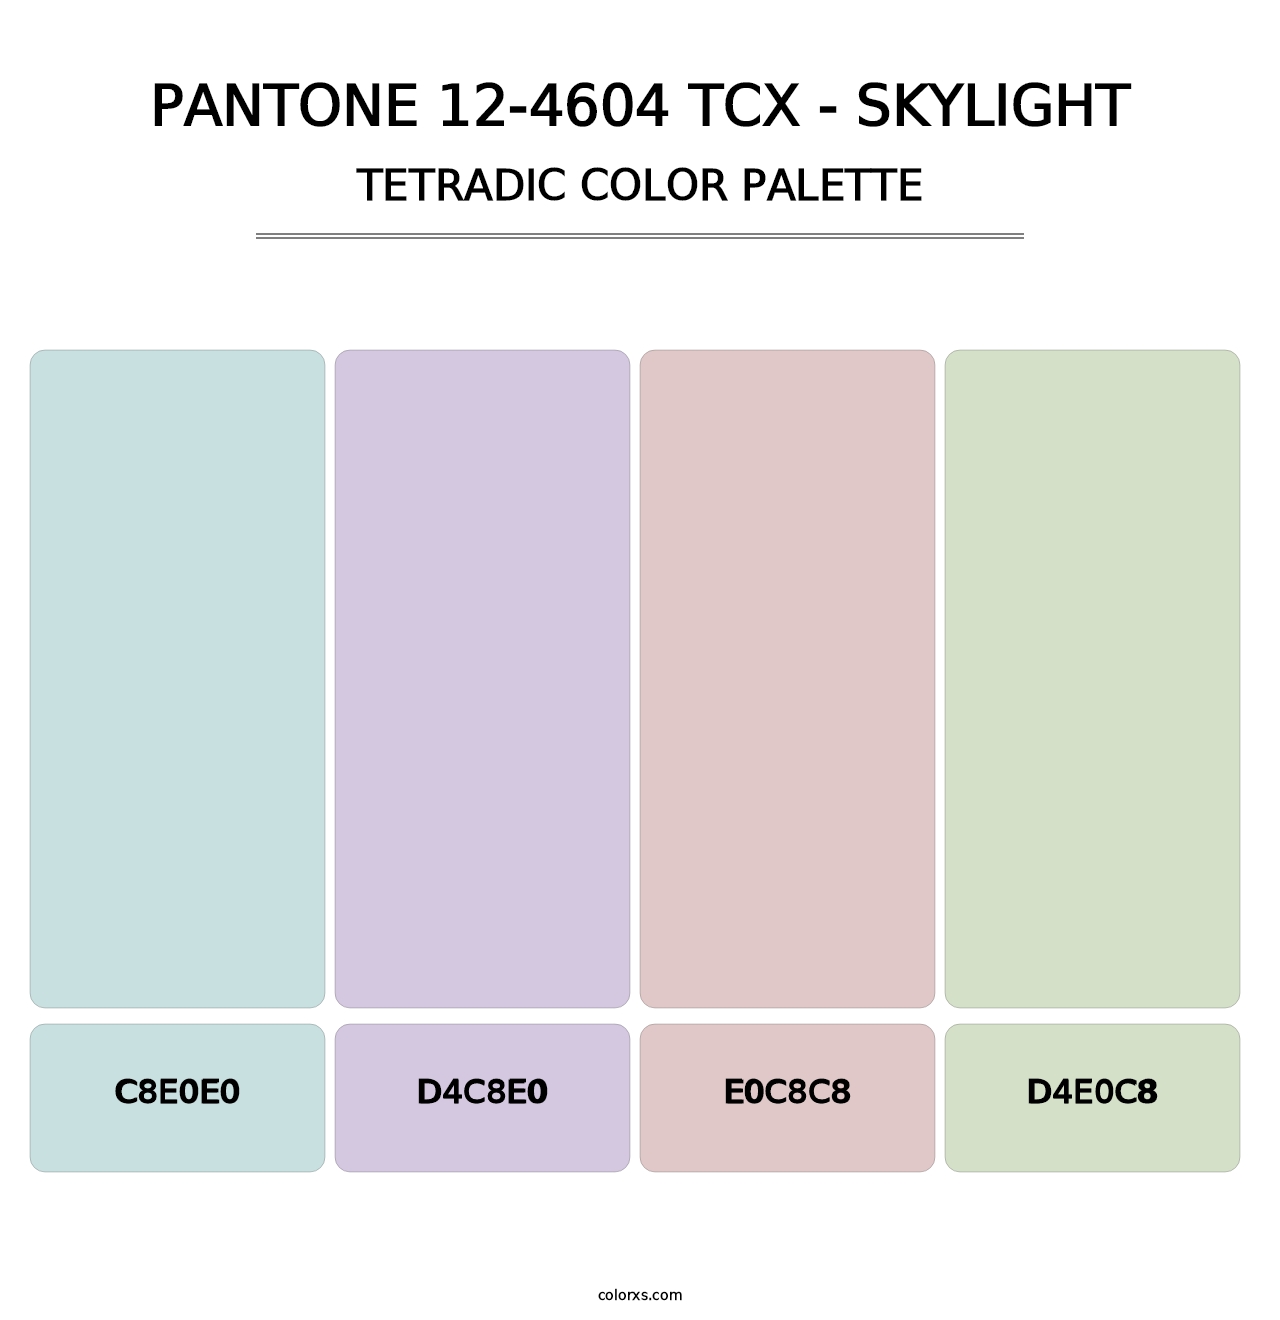 PANTONE 12-4604 TCX - Skylight - Tetradic Color Palette